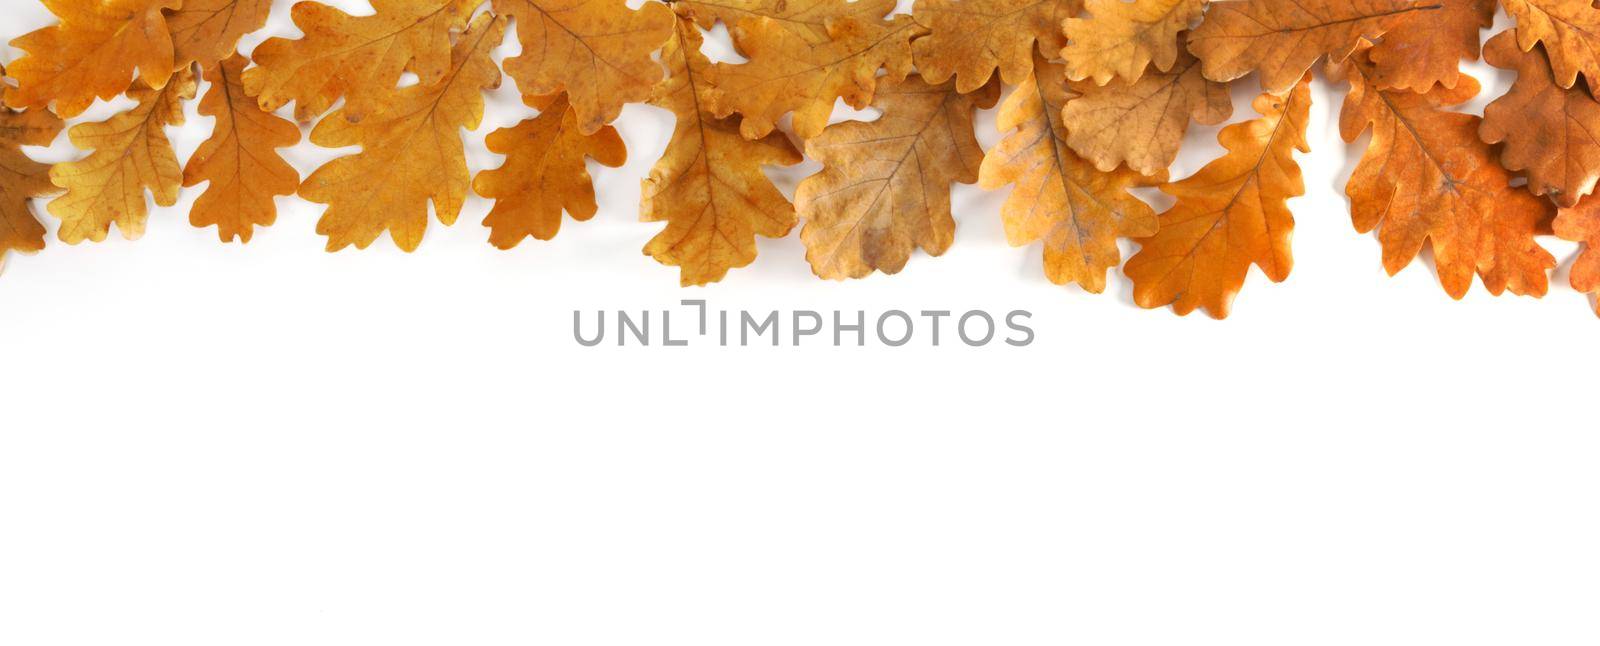 Autumn oak leaves on white by Yellowj